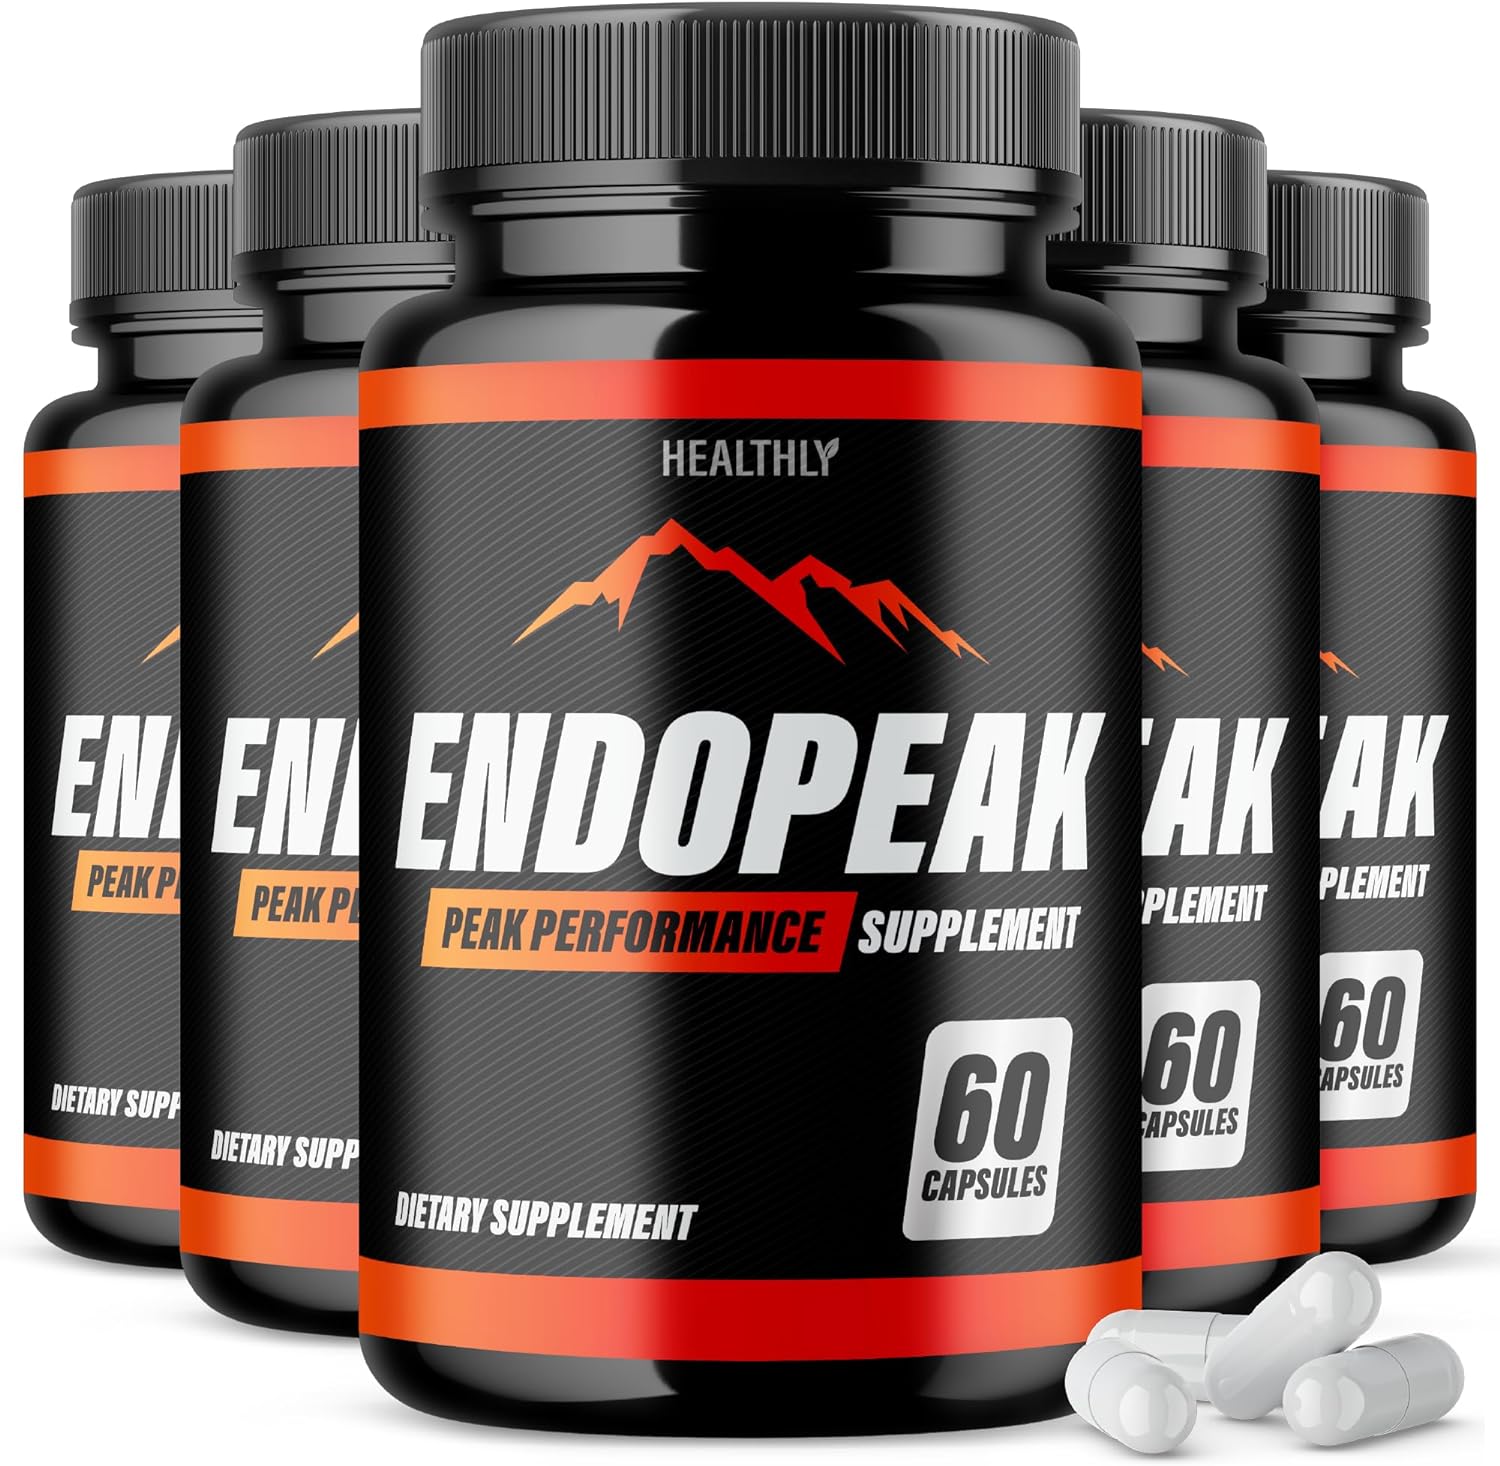 Endopeak Supplement Pills